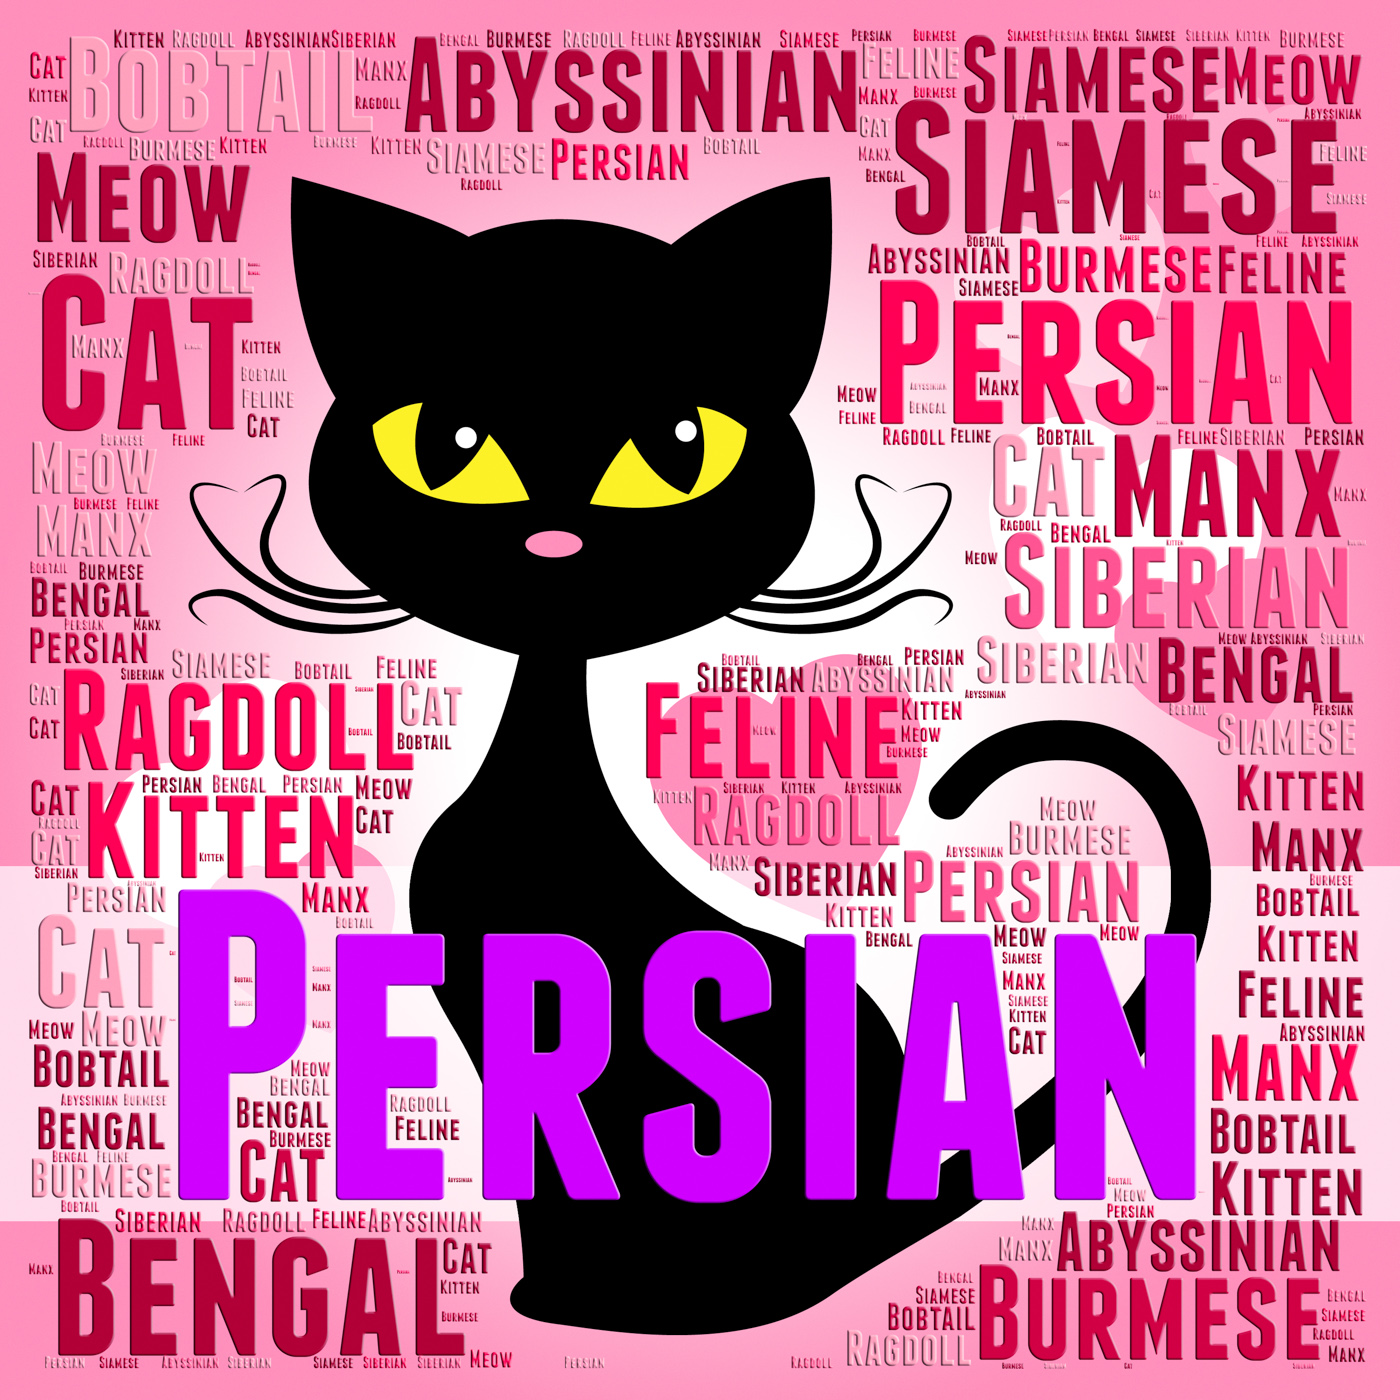 Persian cat represents pet bred and kitten photo